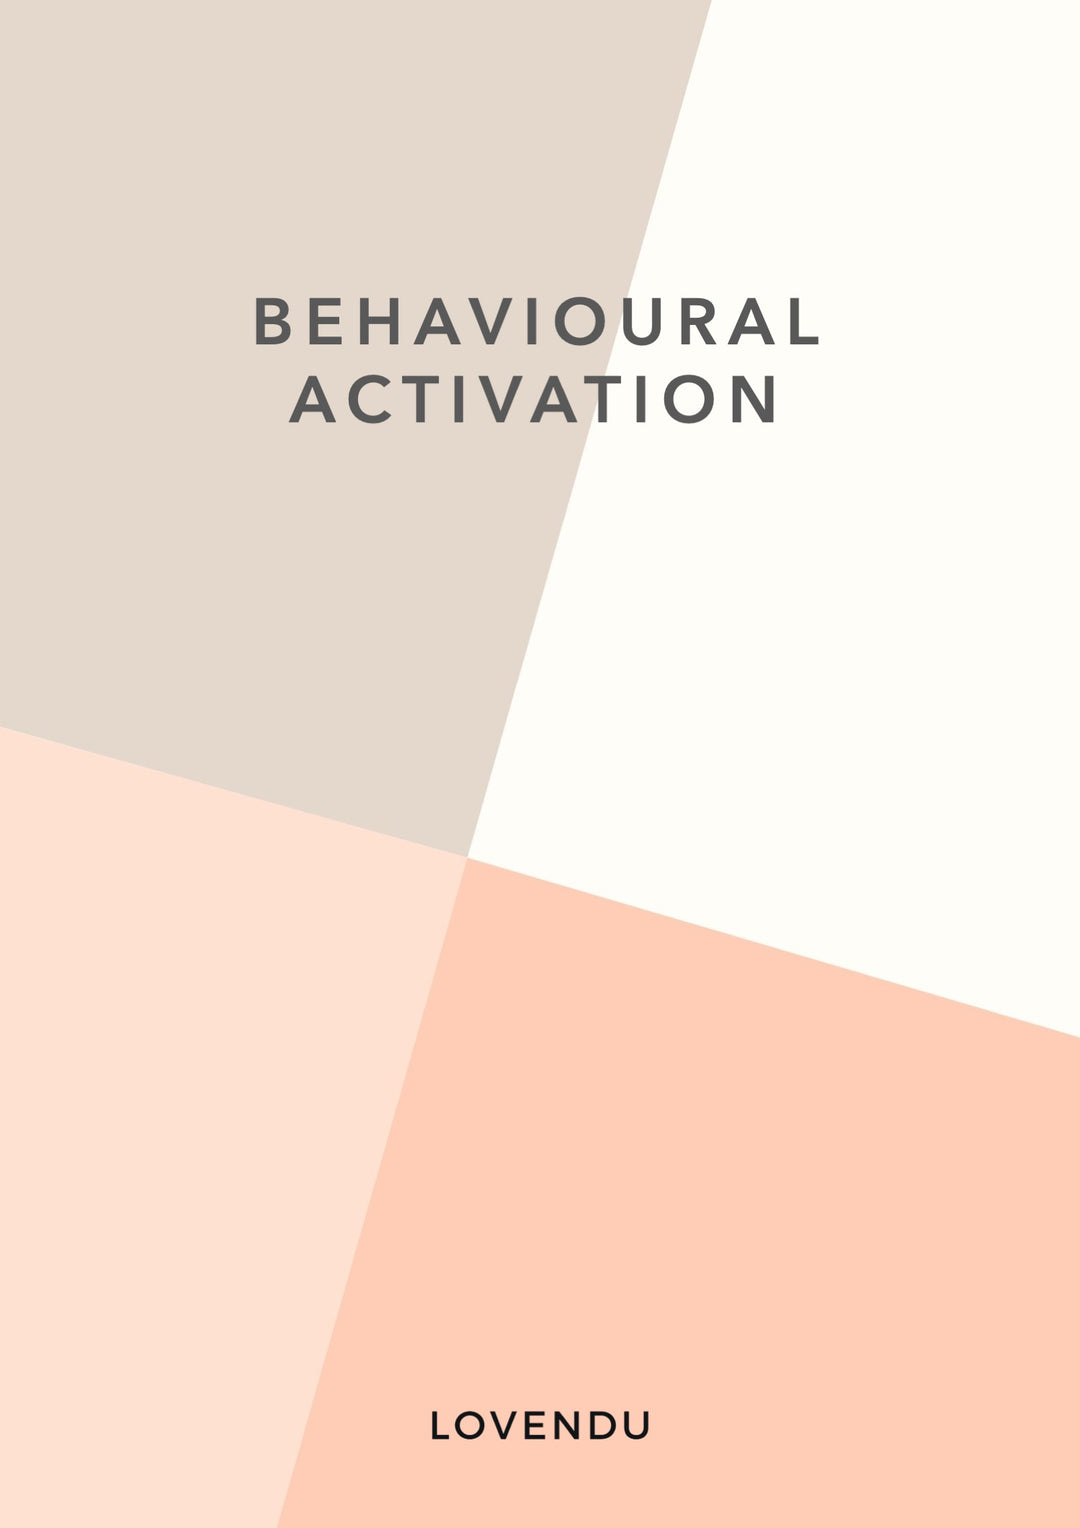 Printable: Behavioural Activation, Lovendu, Printable, printable-behavioural-activation,  - Lovendu